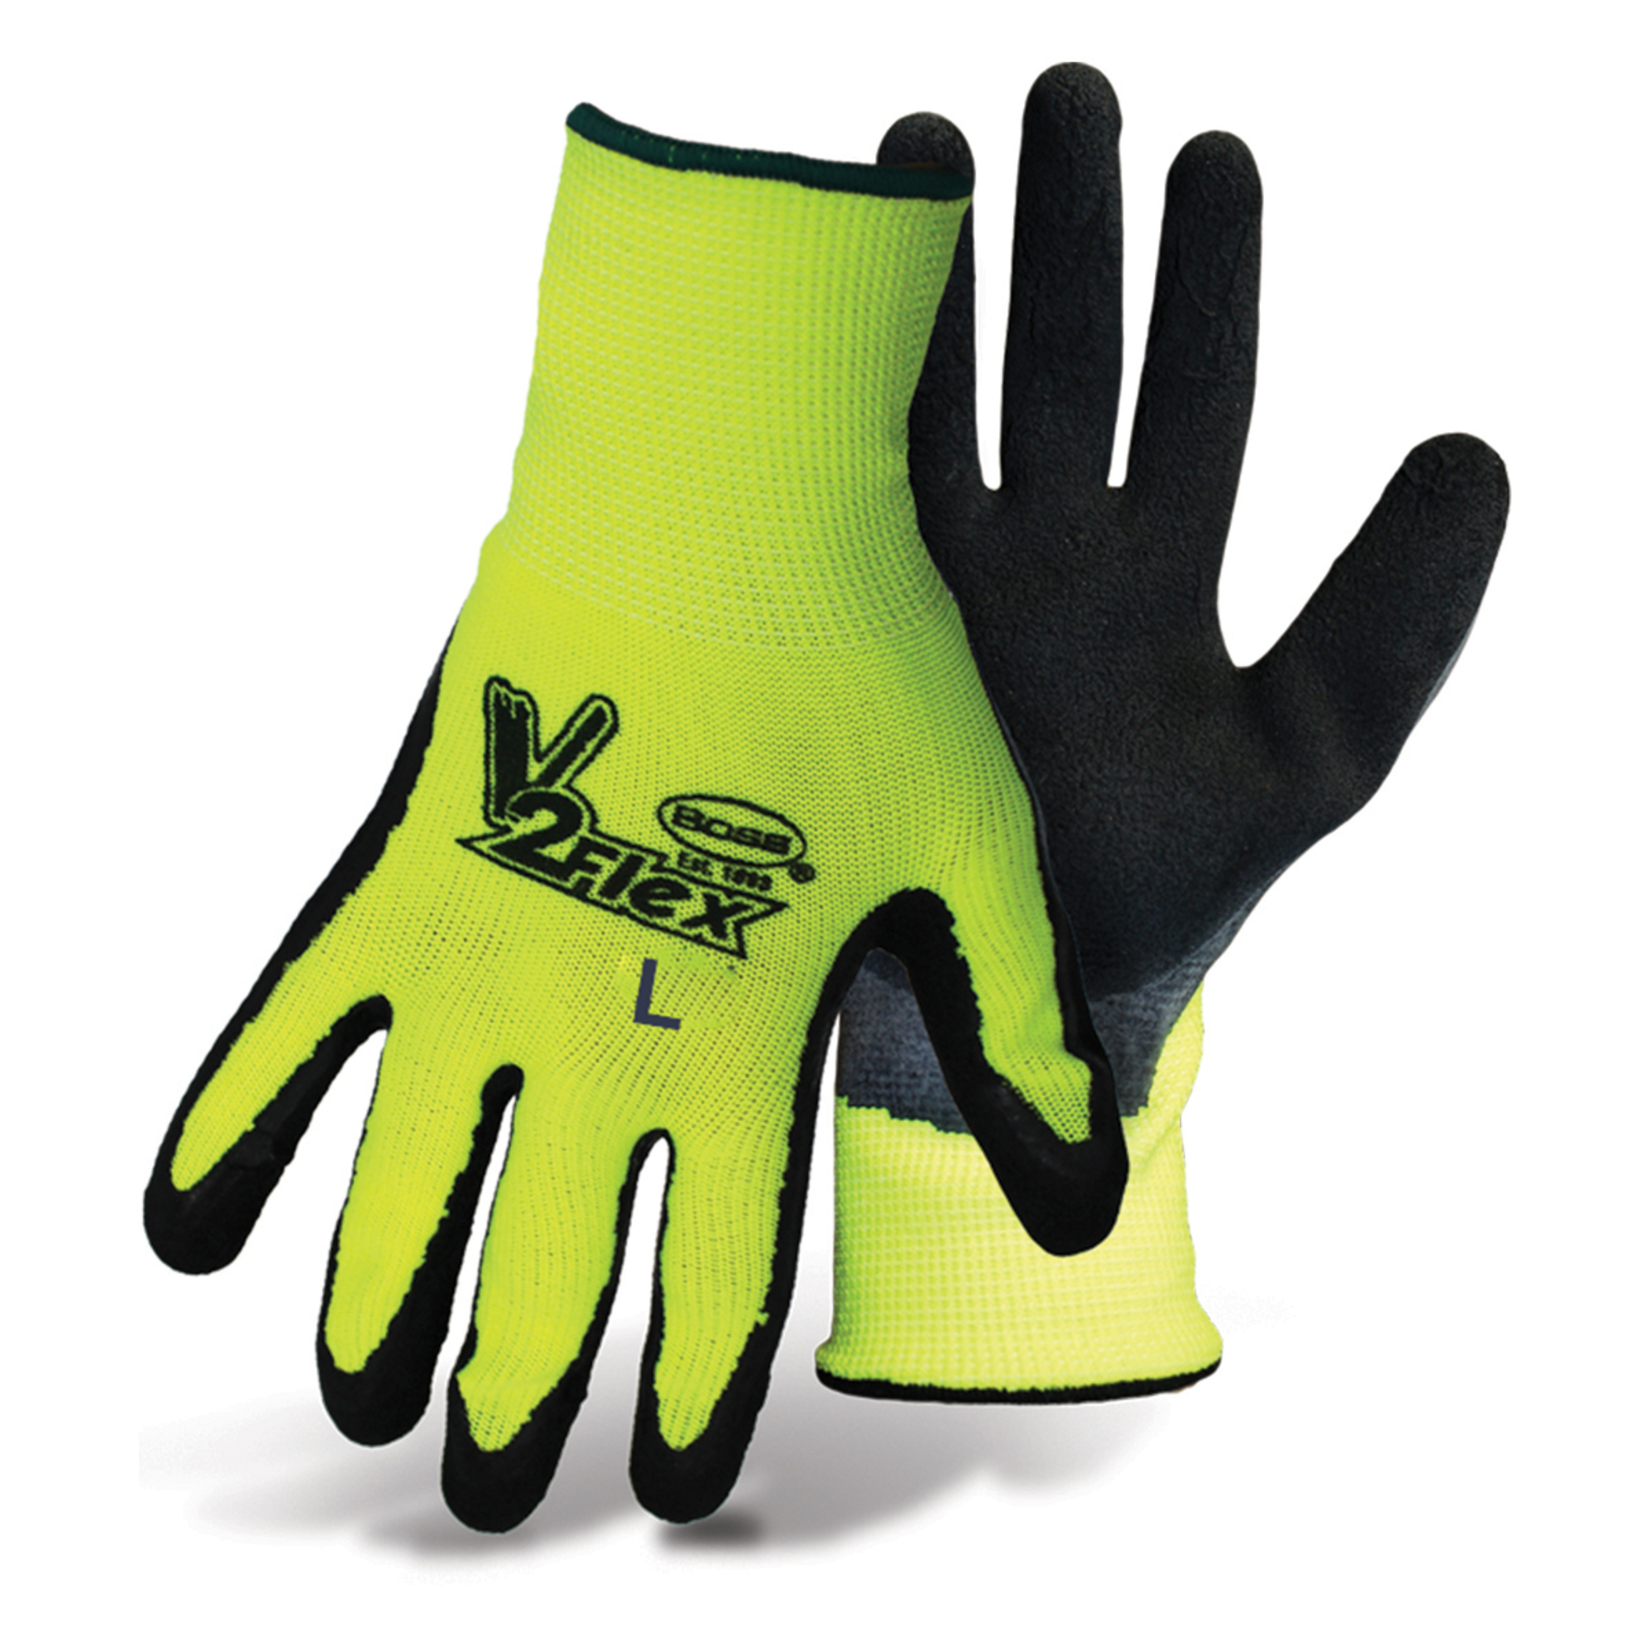 Garden Glove - BOSS V2 FLEXI-GRIP Poly Knit Latex Palm - Large